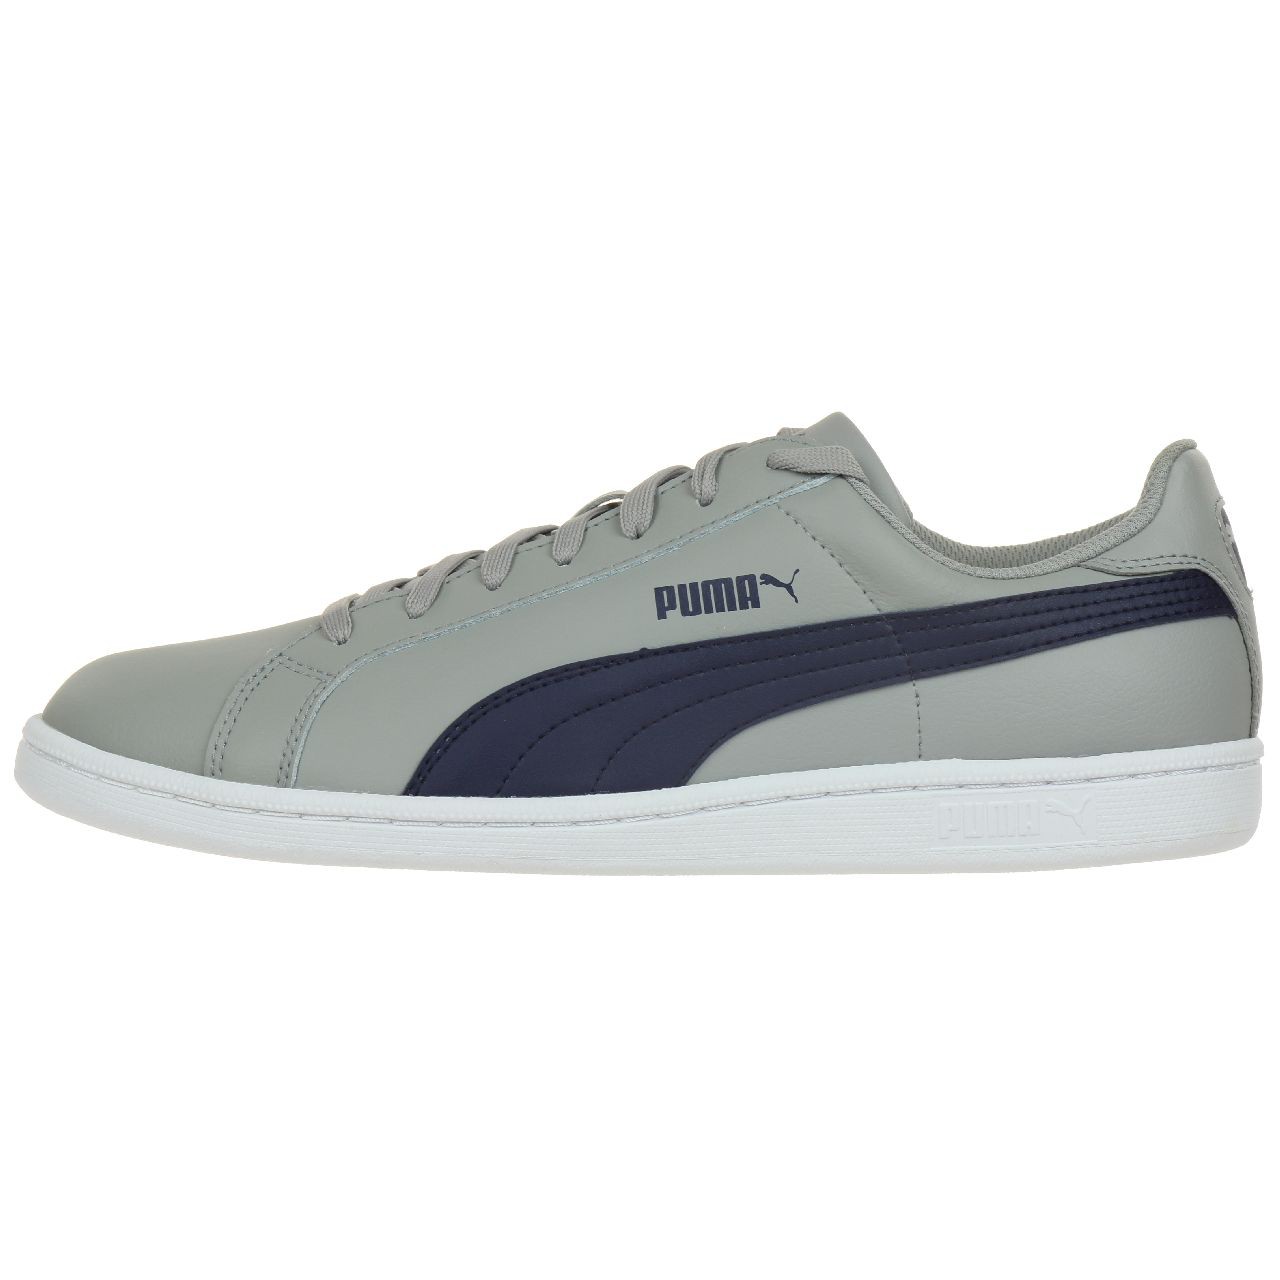 Puma Smash L Herren Sneaker Schuhe Leder grau 356722 13